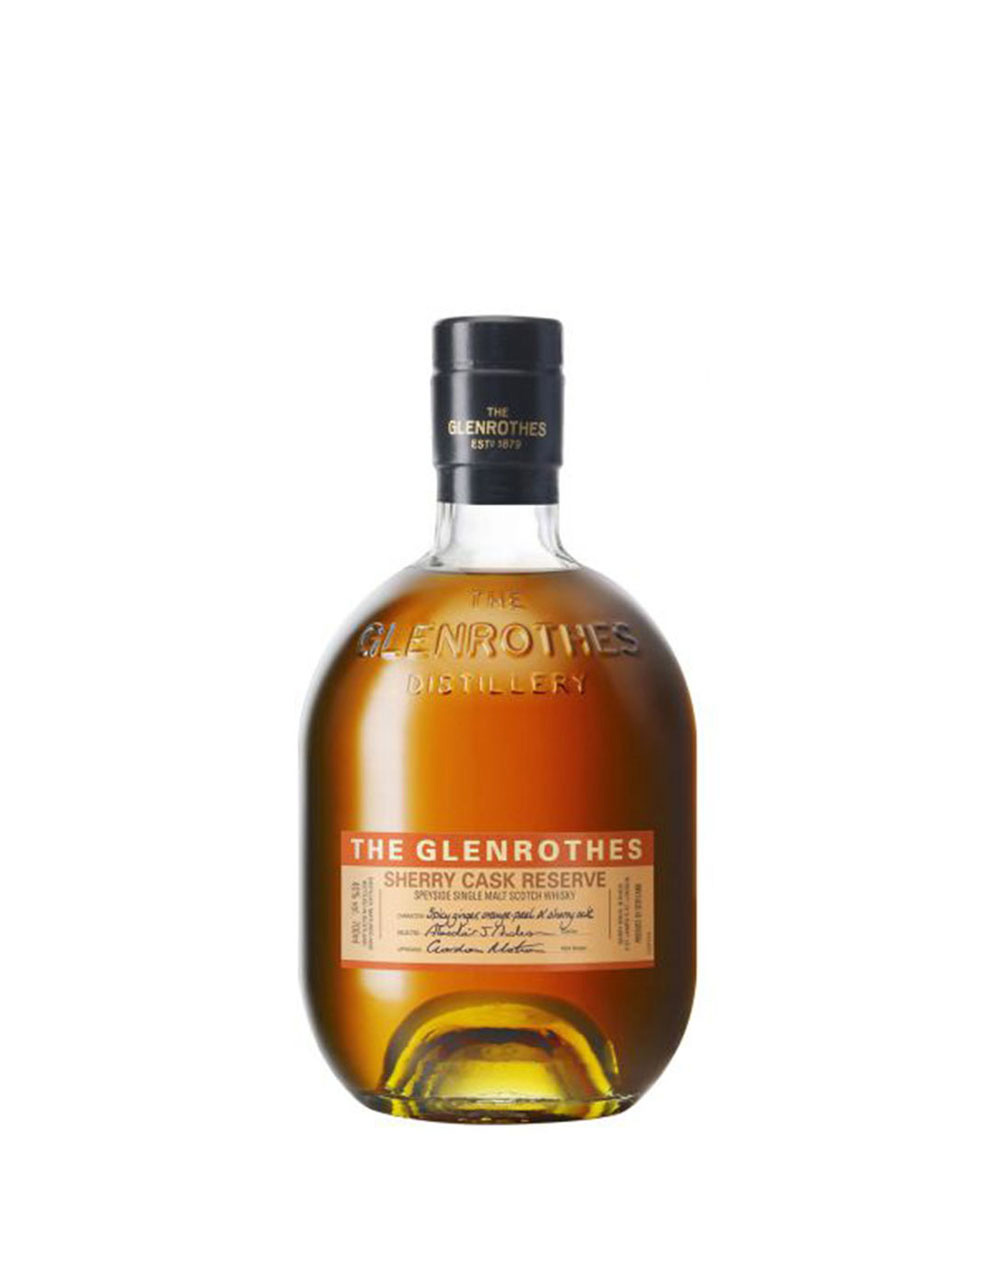 The Glenlivet 36 Year Old 1976 Cask Strength Single Malt Scotch Whisky